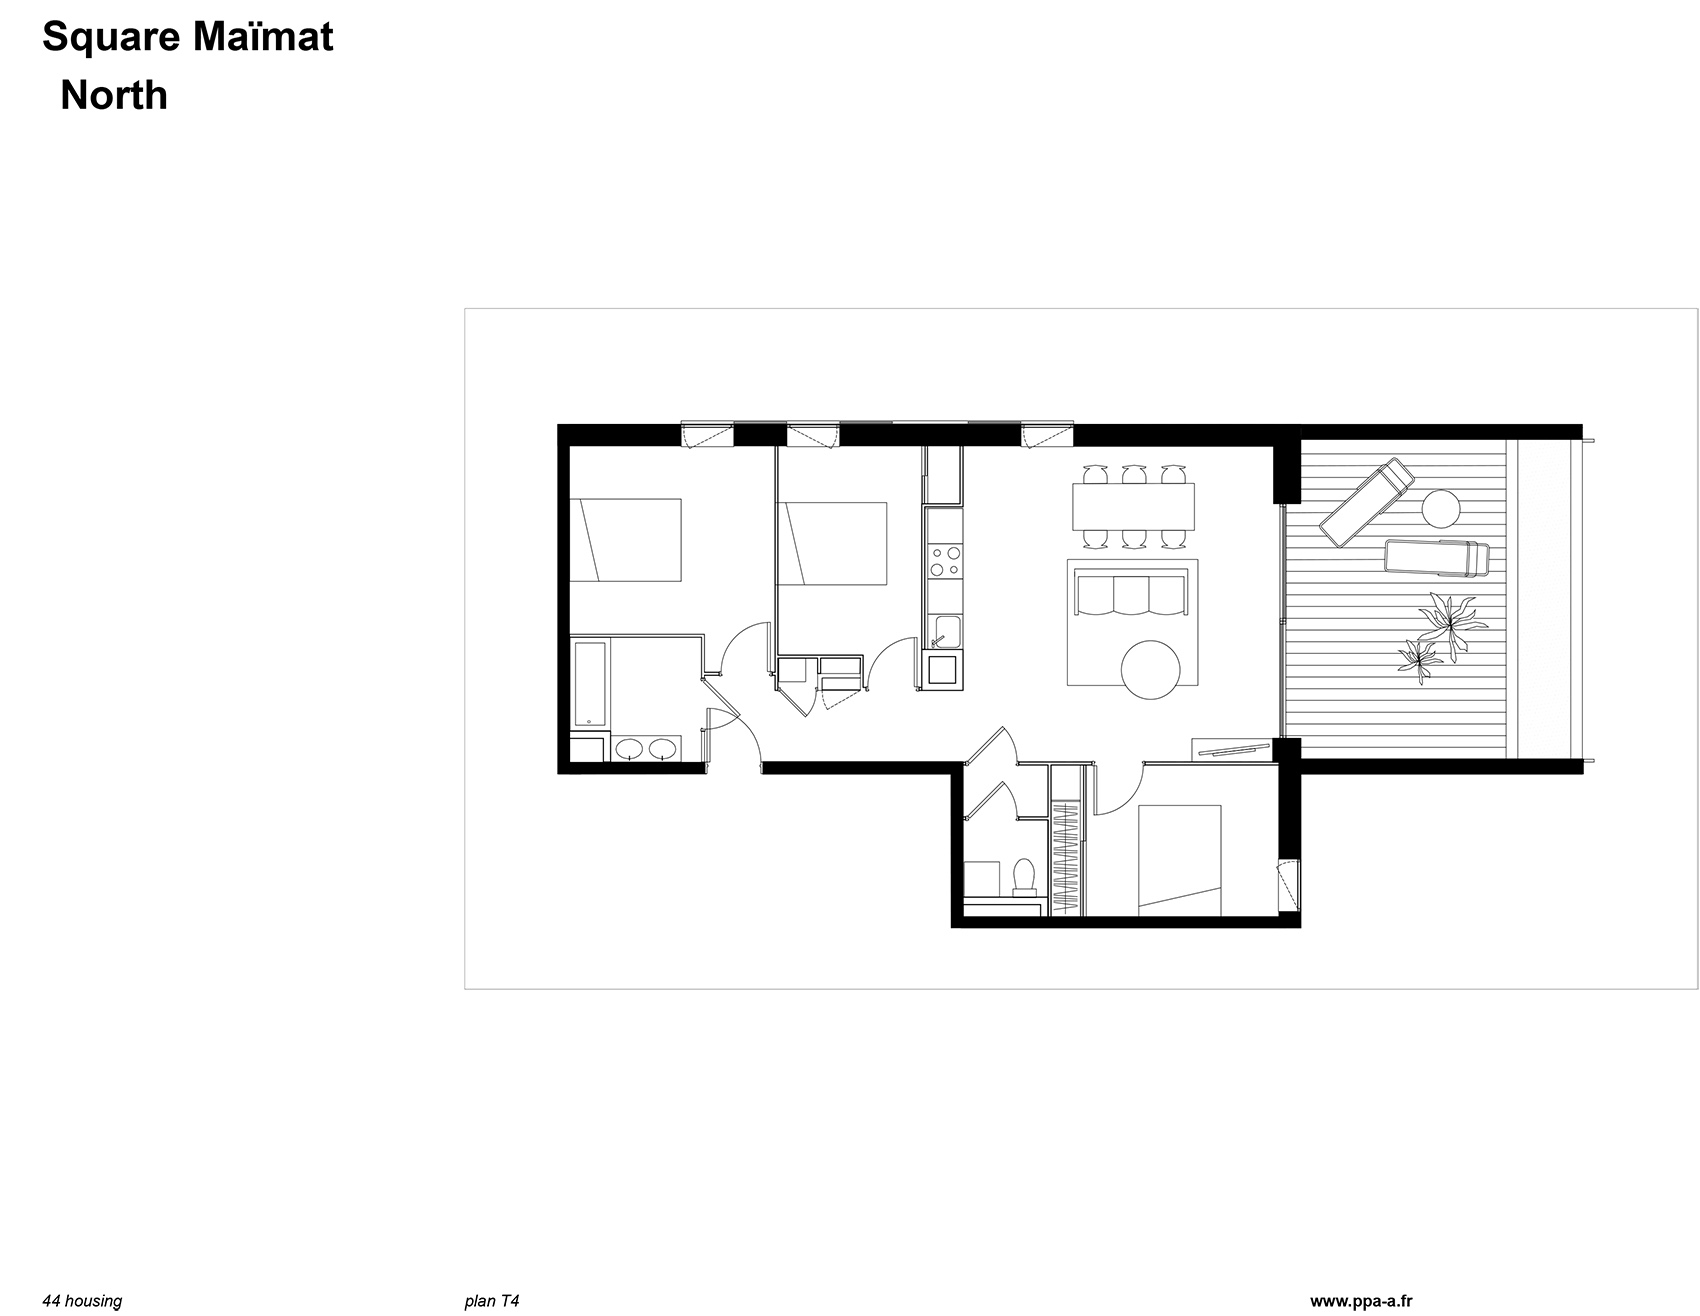 Square Maïmat住宅区更新，法国/释放公共空间，连接社区居民-117